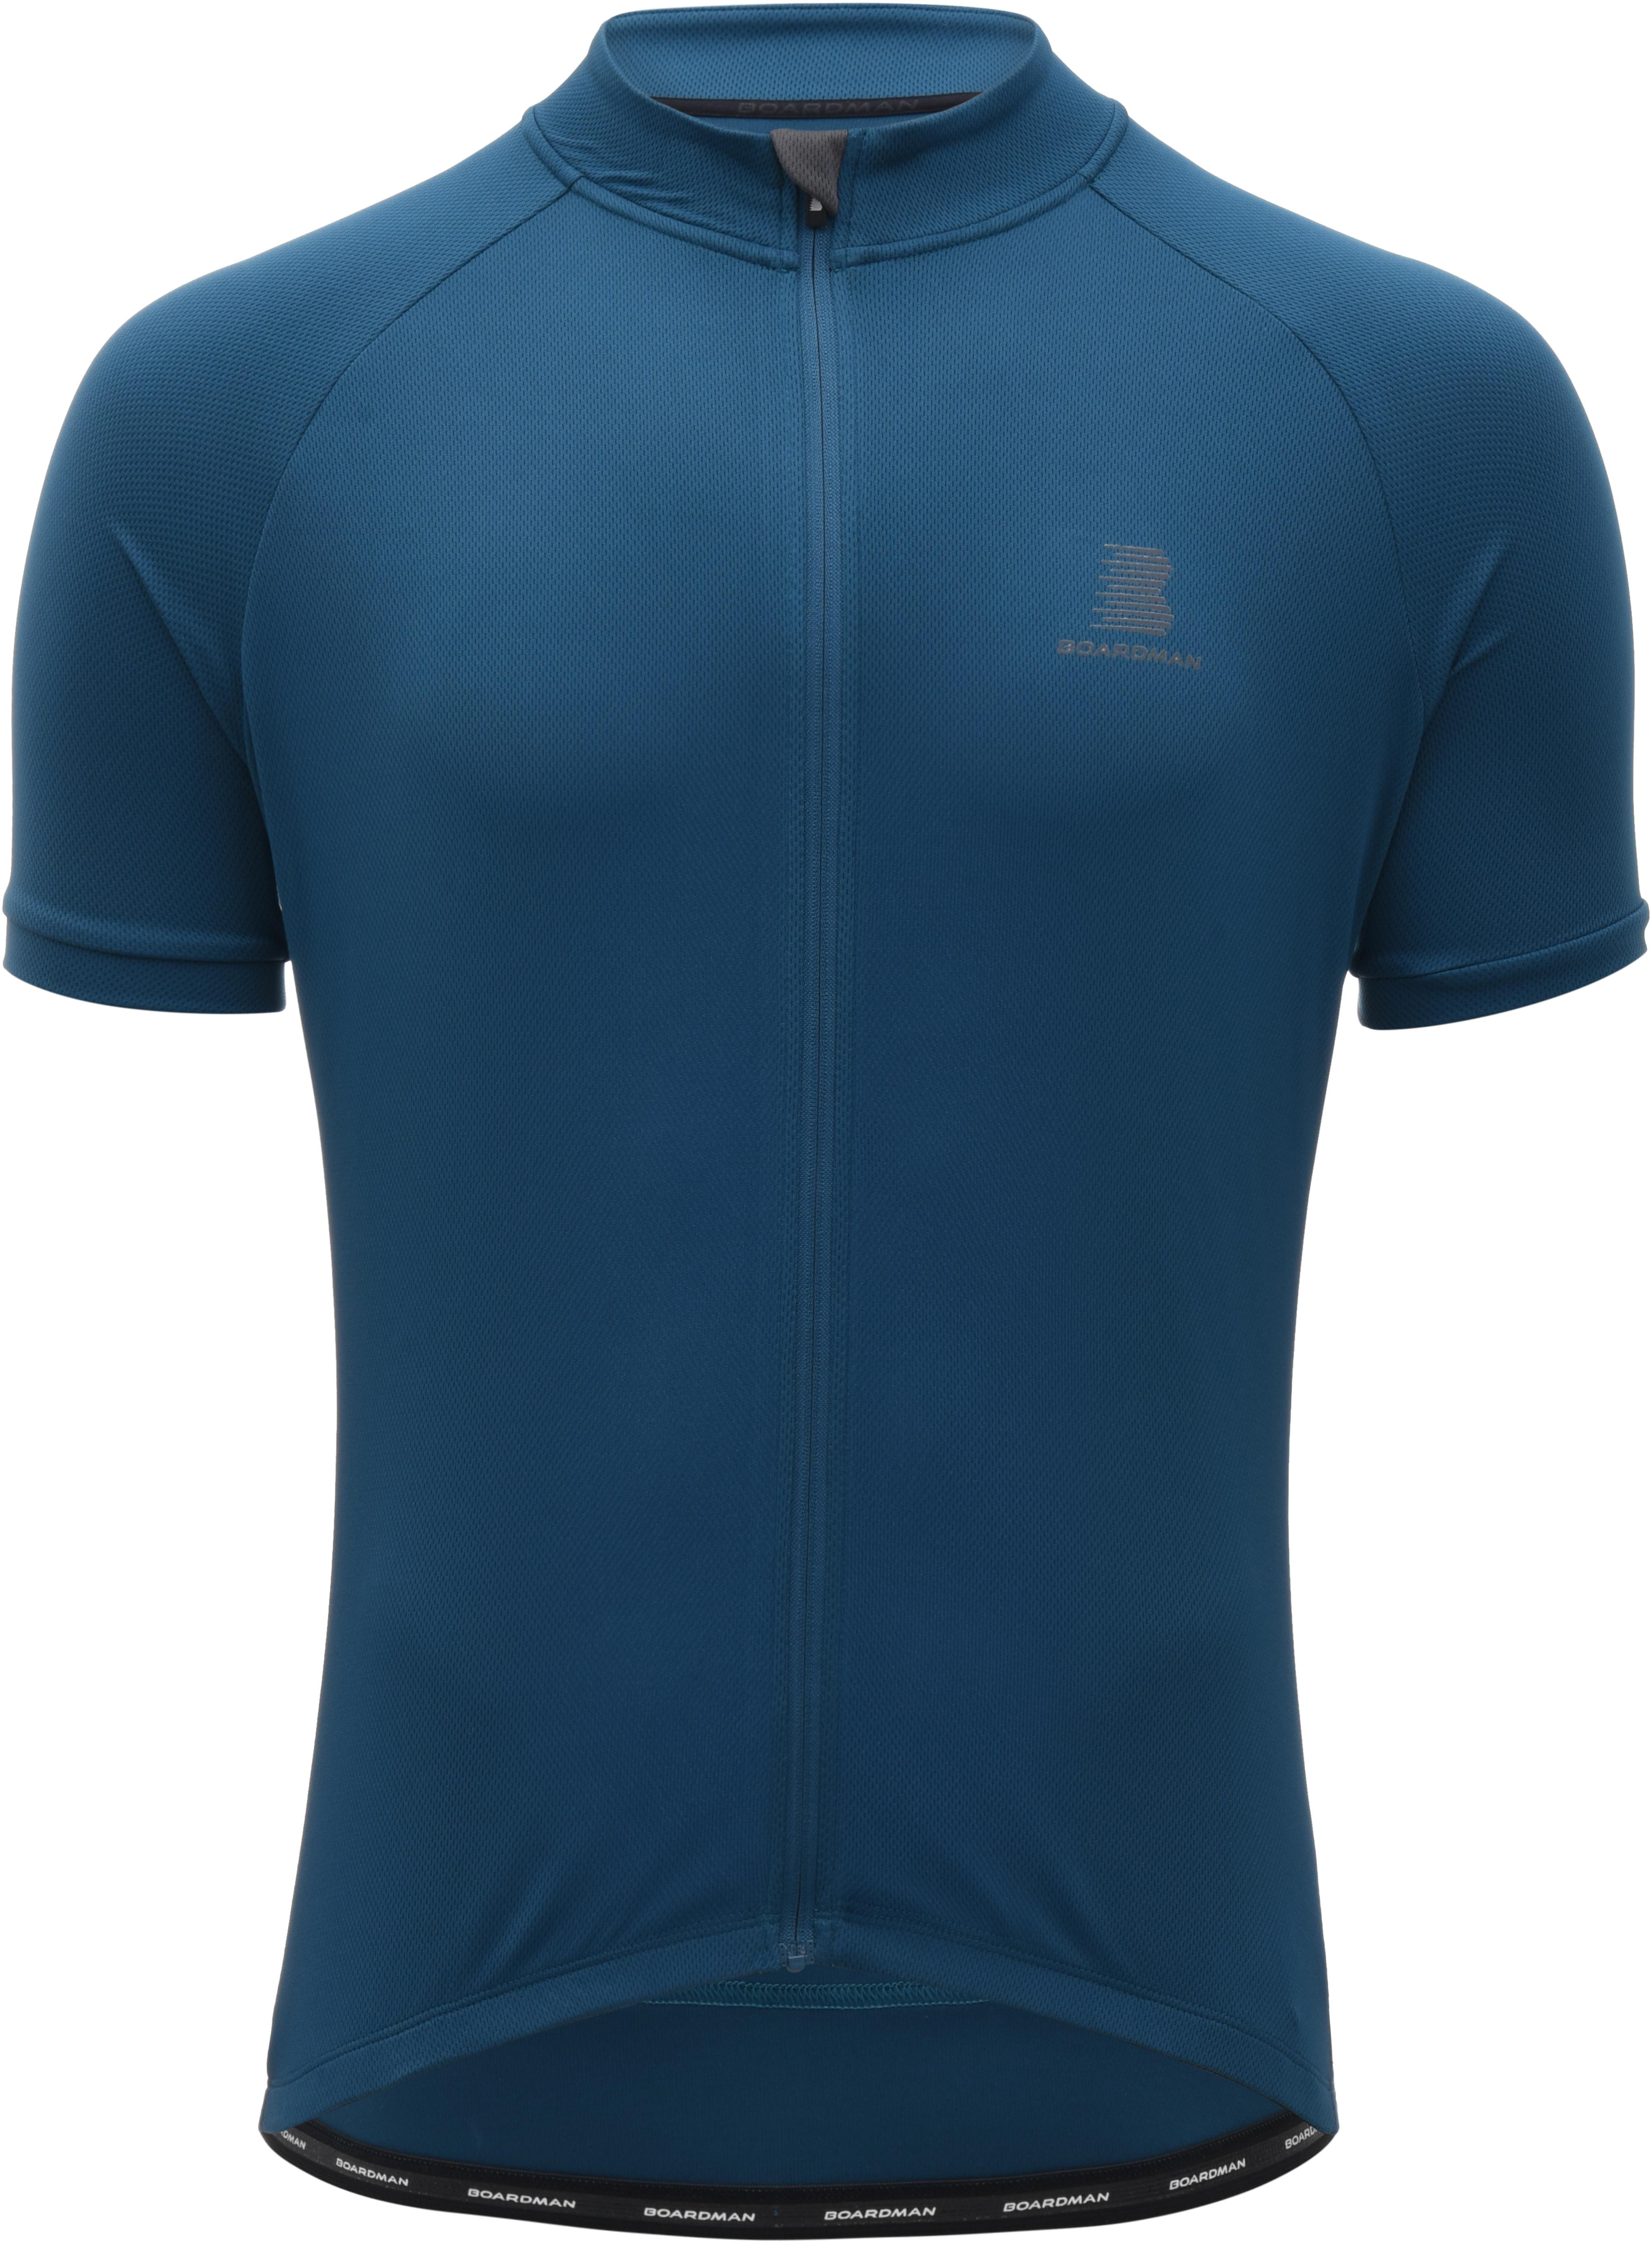 Boardman Mens Cycling Jersey - Blue Large